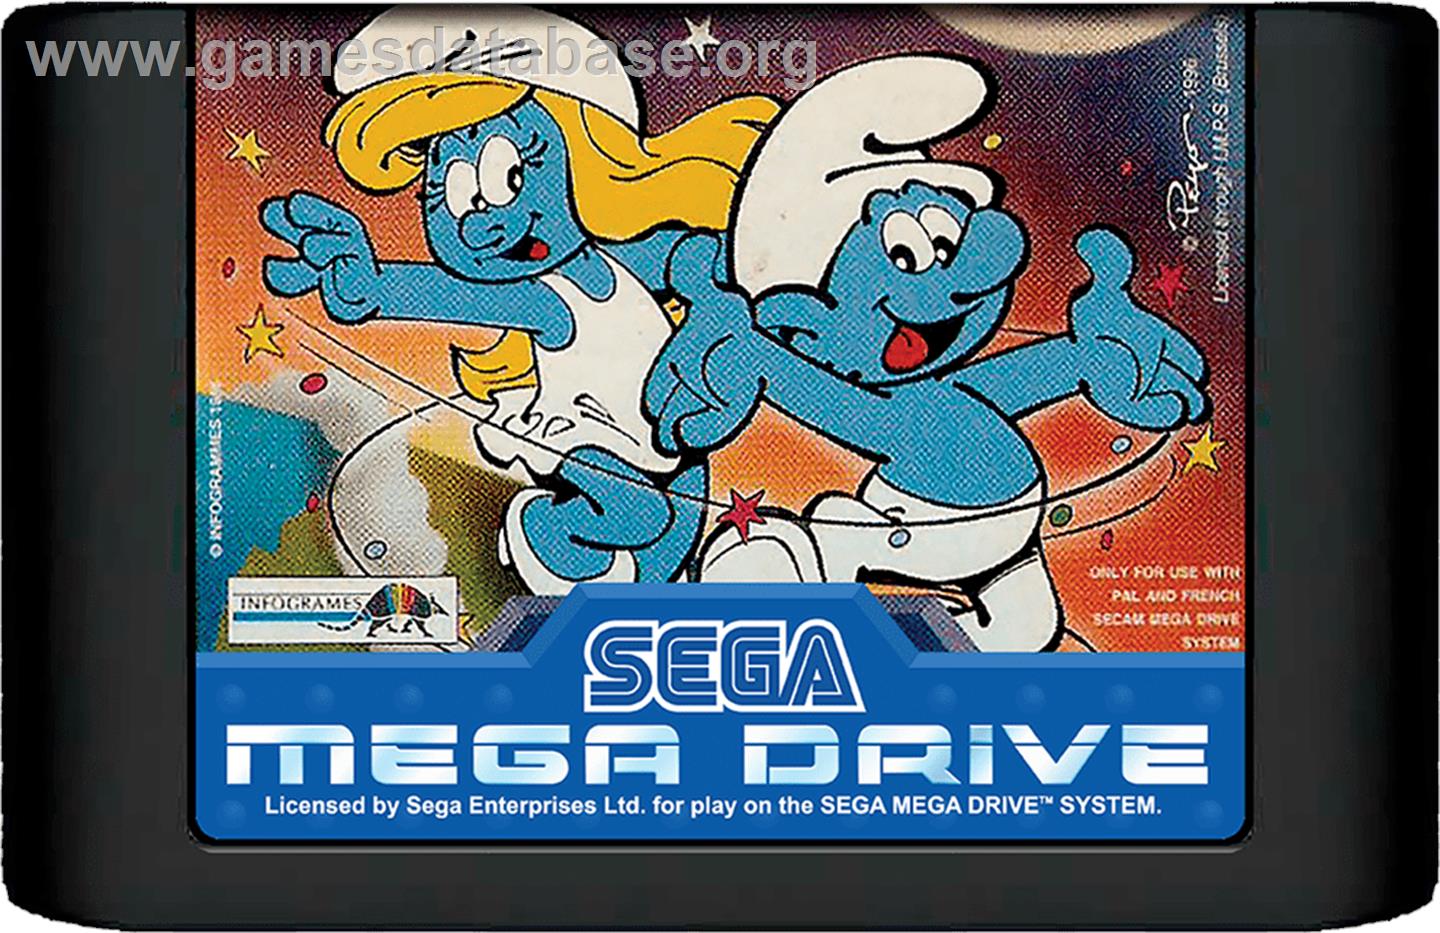 Smurfs Travel the World, The - Sega Genesis - Artwork - Cartridge